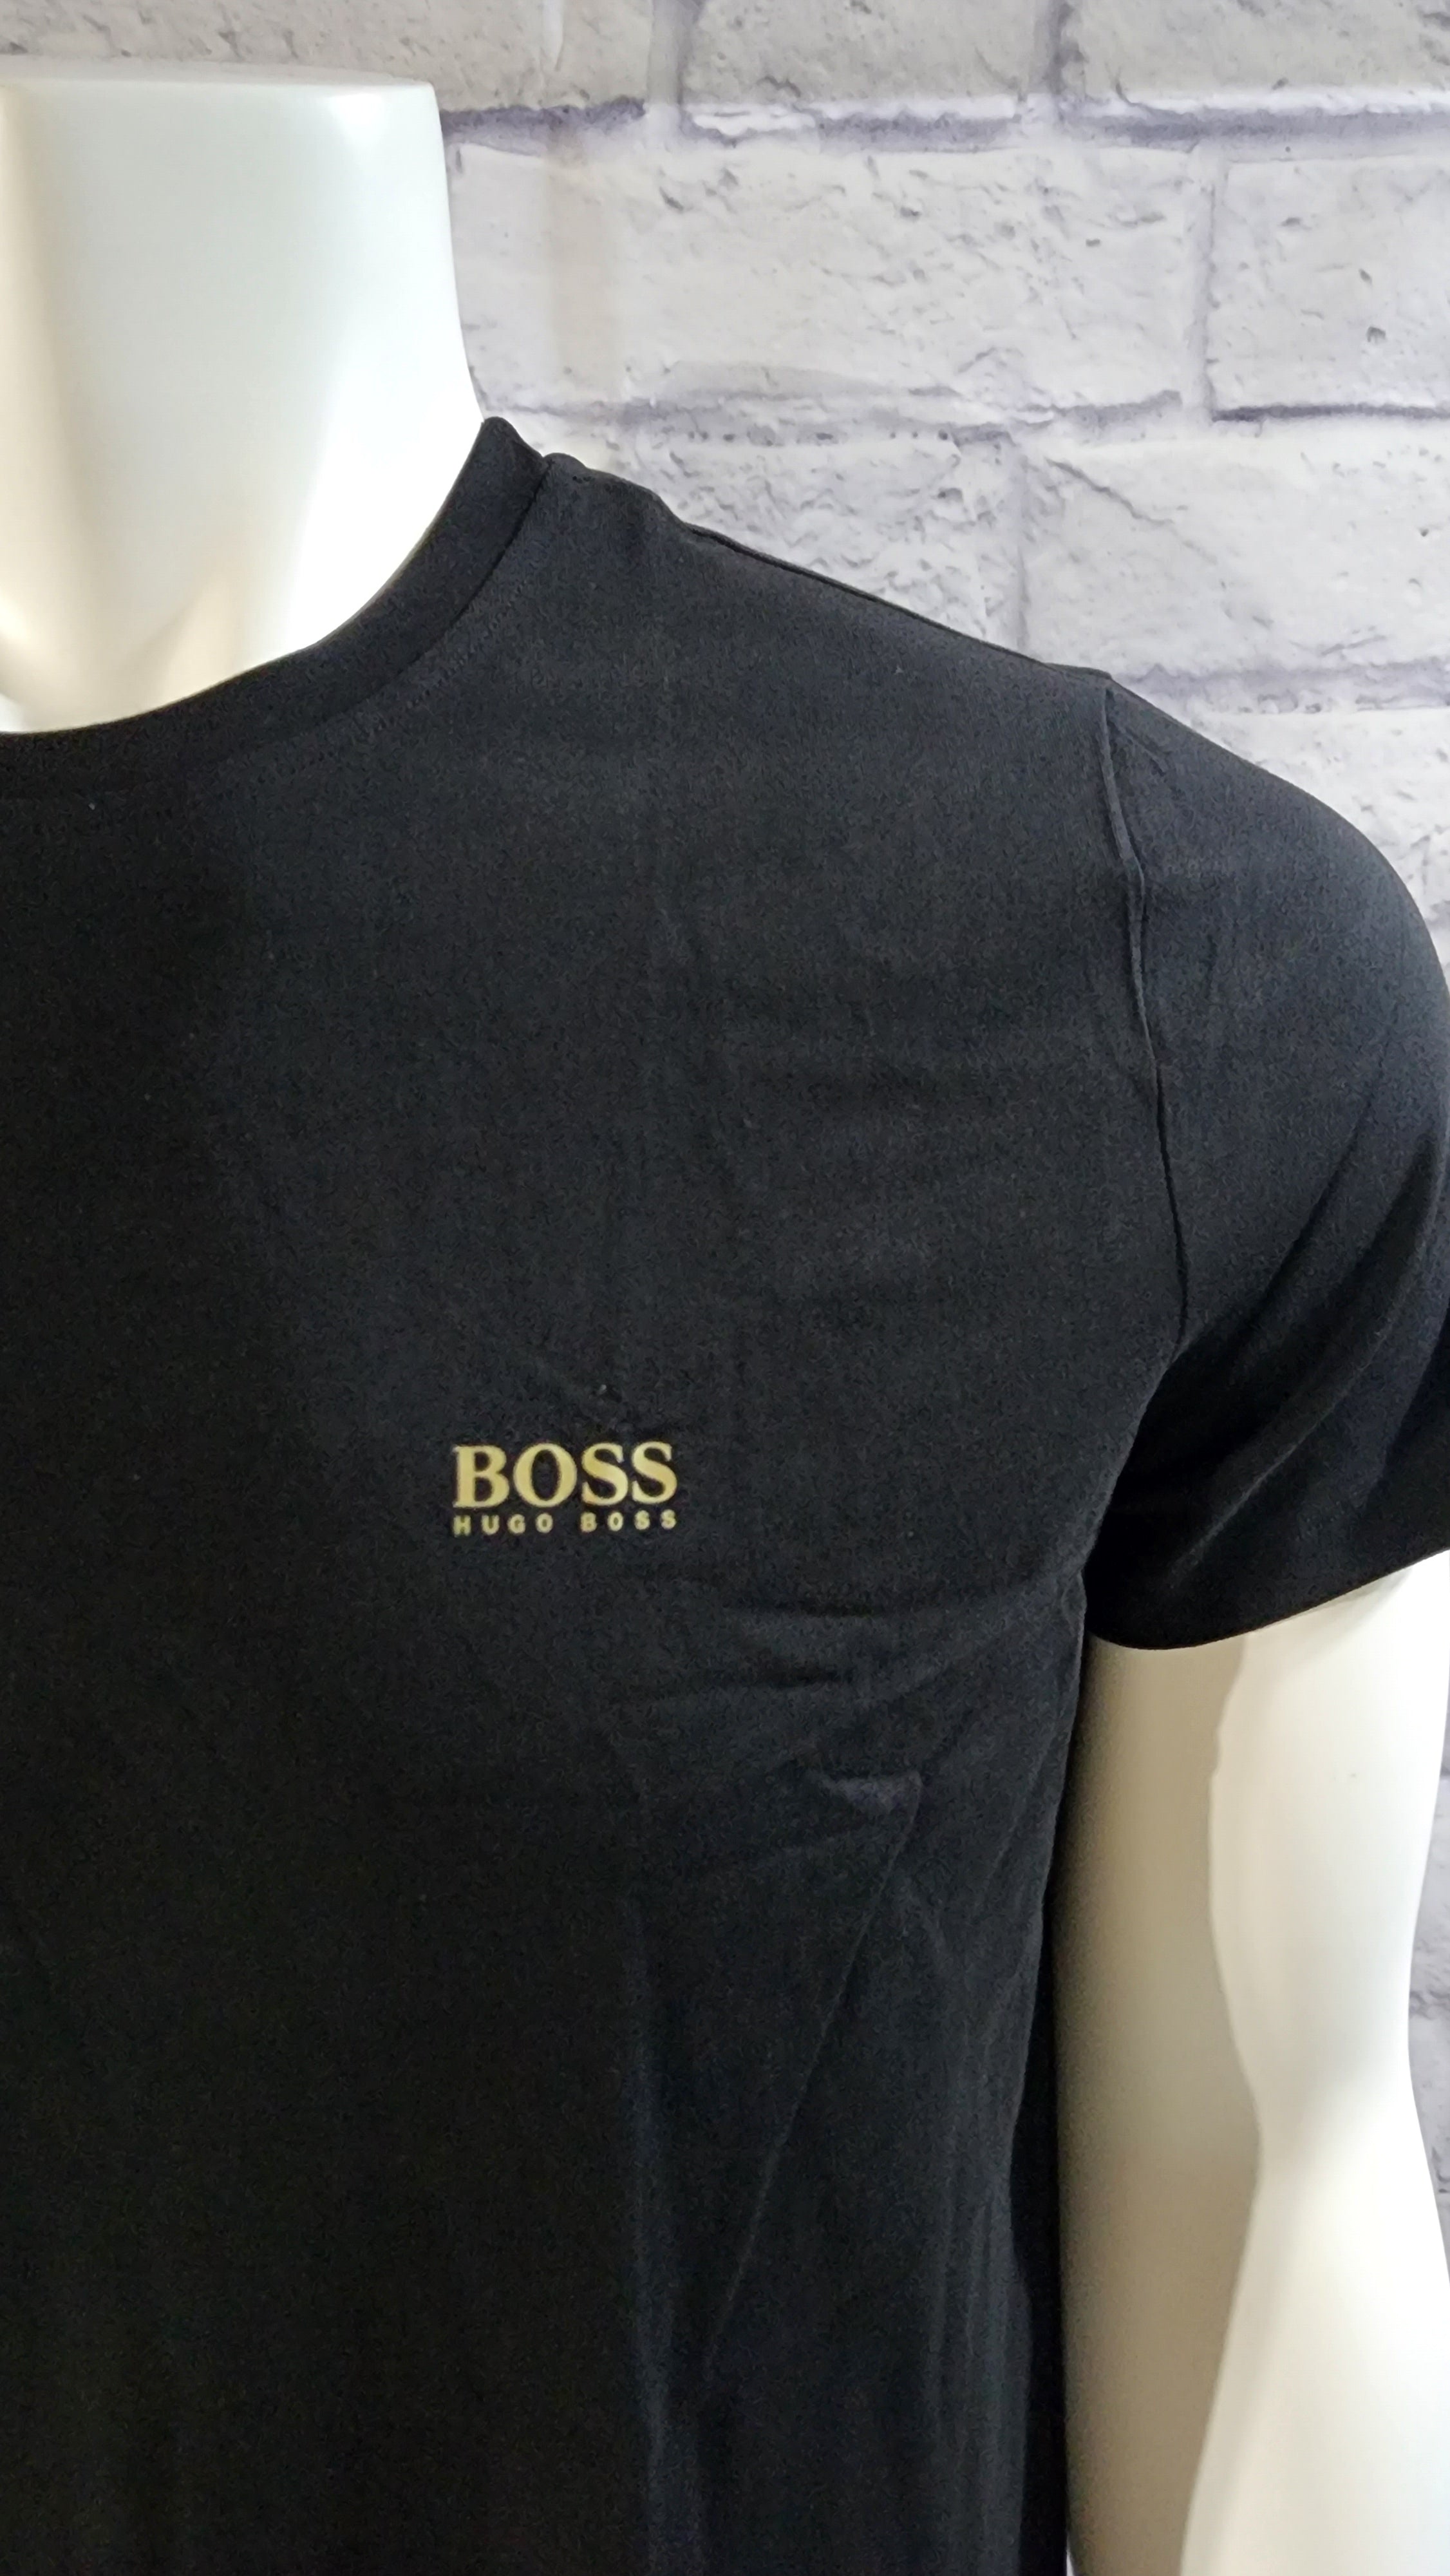 Hugo Boss: Basic T-Shirt (Black with Gold Logo)